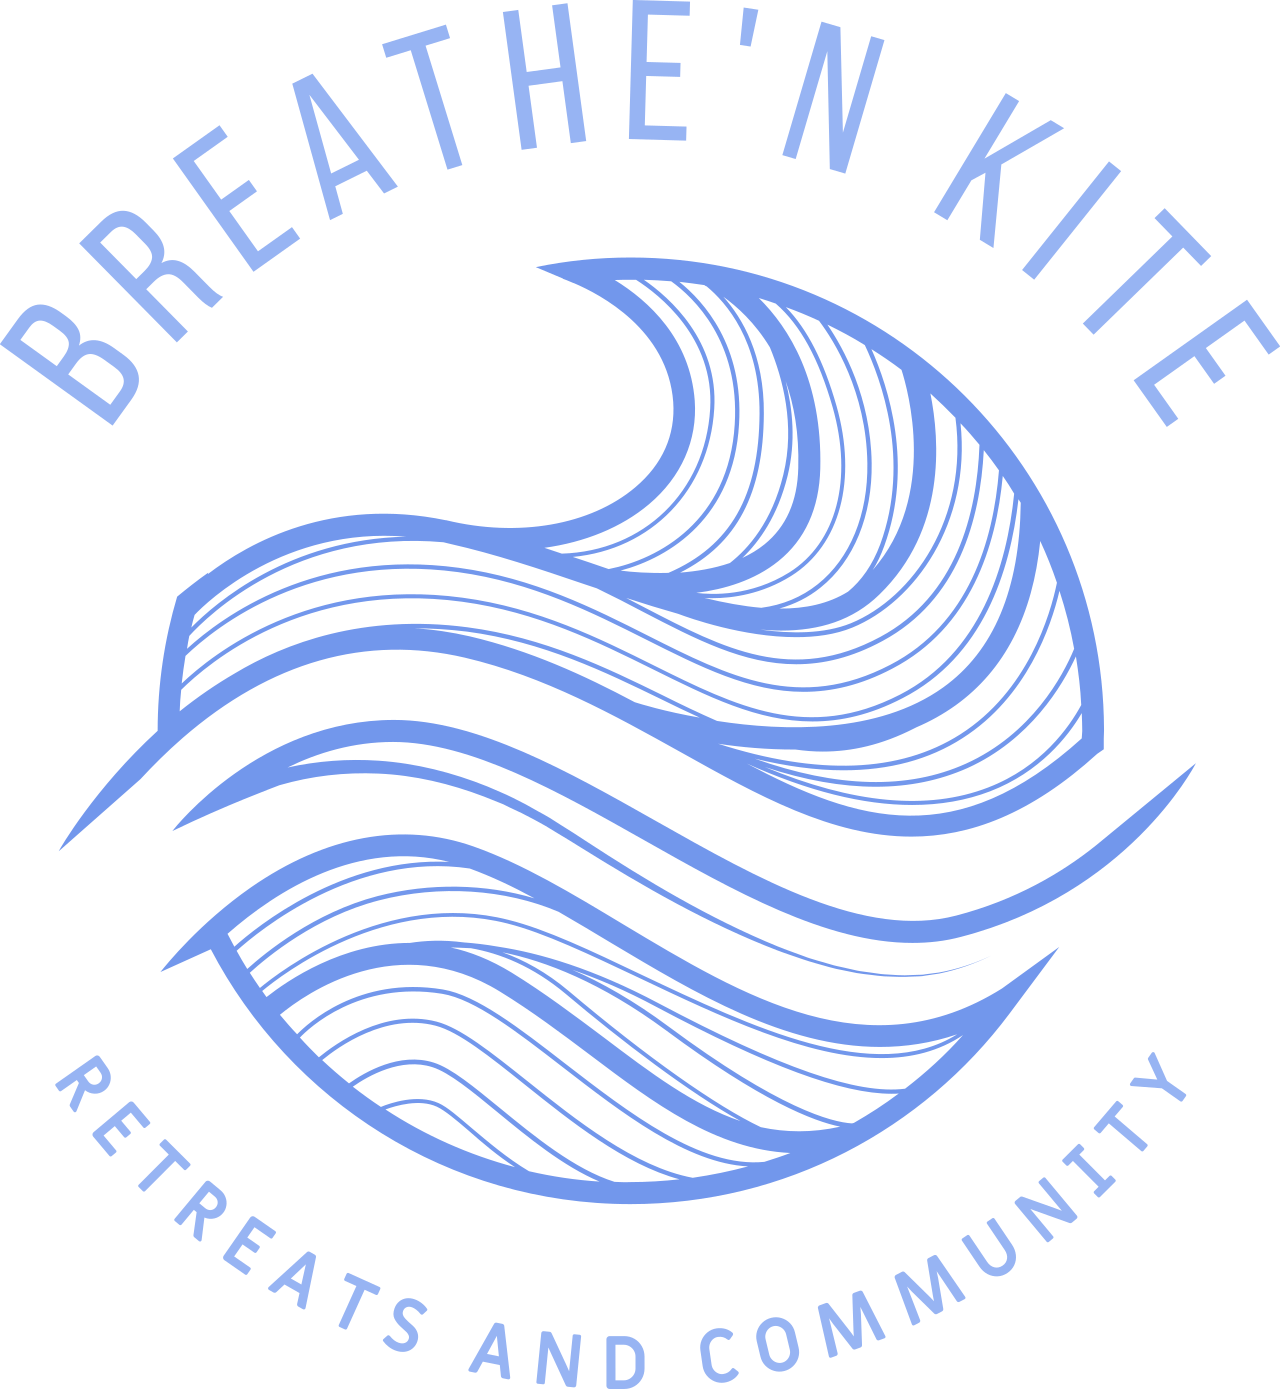 BREATHE'N KITE's logo